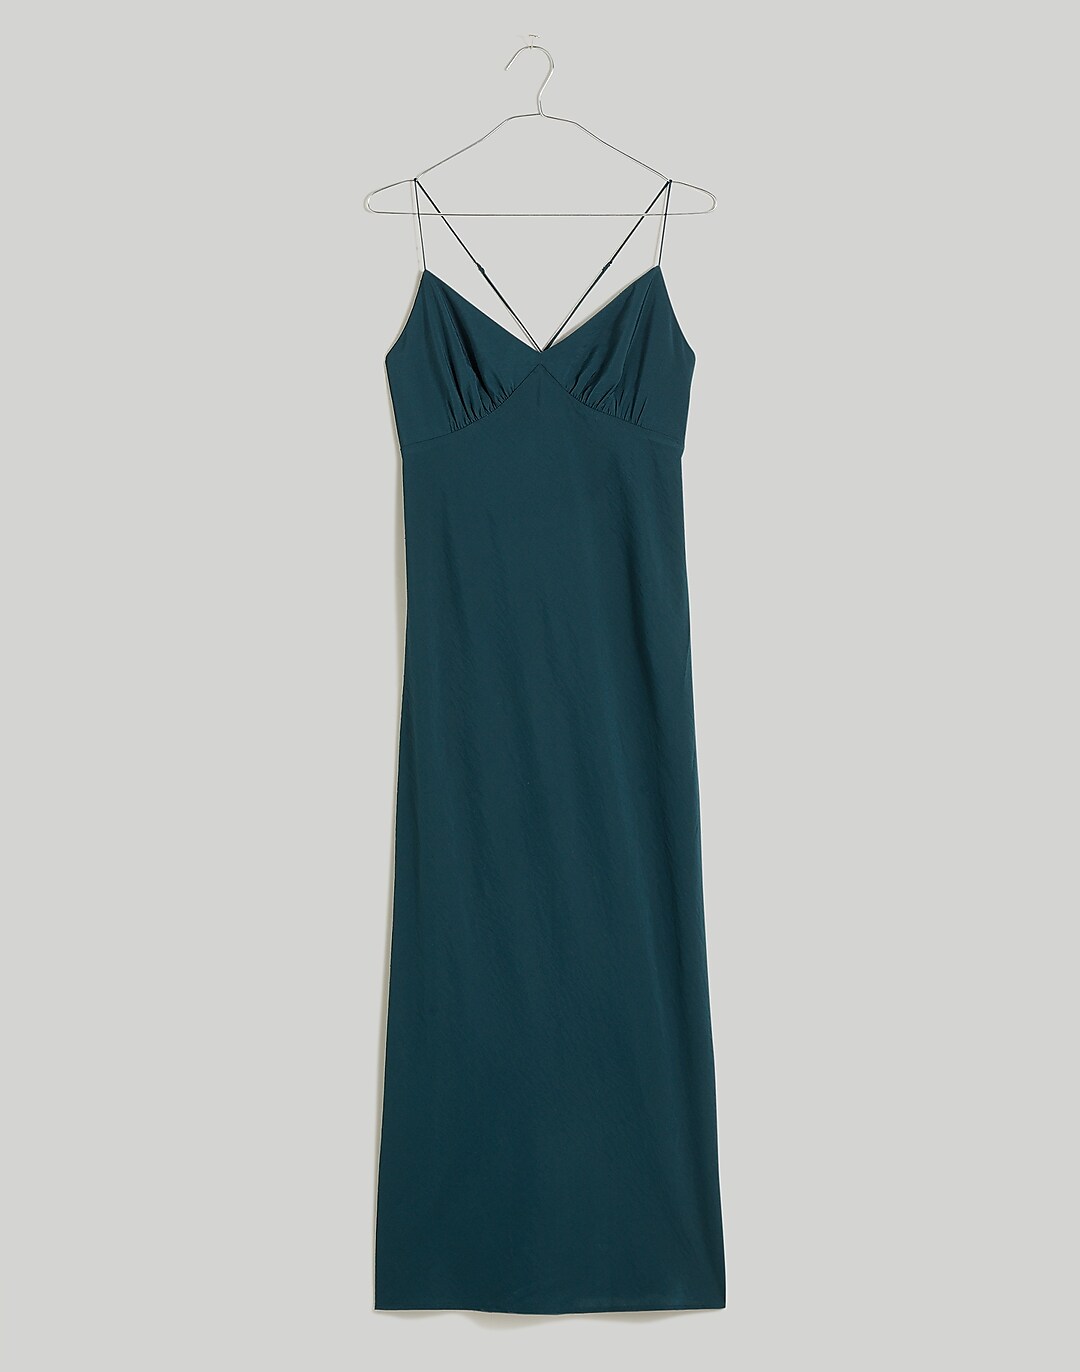 Chartreuse Midi Dress - Tie-Back Dress - Faux-Wrap Midi Dress - Lulus